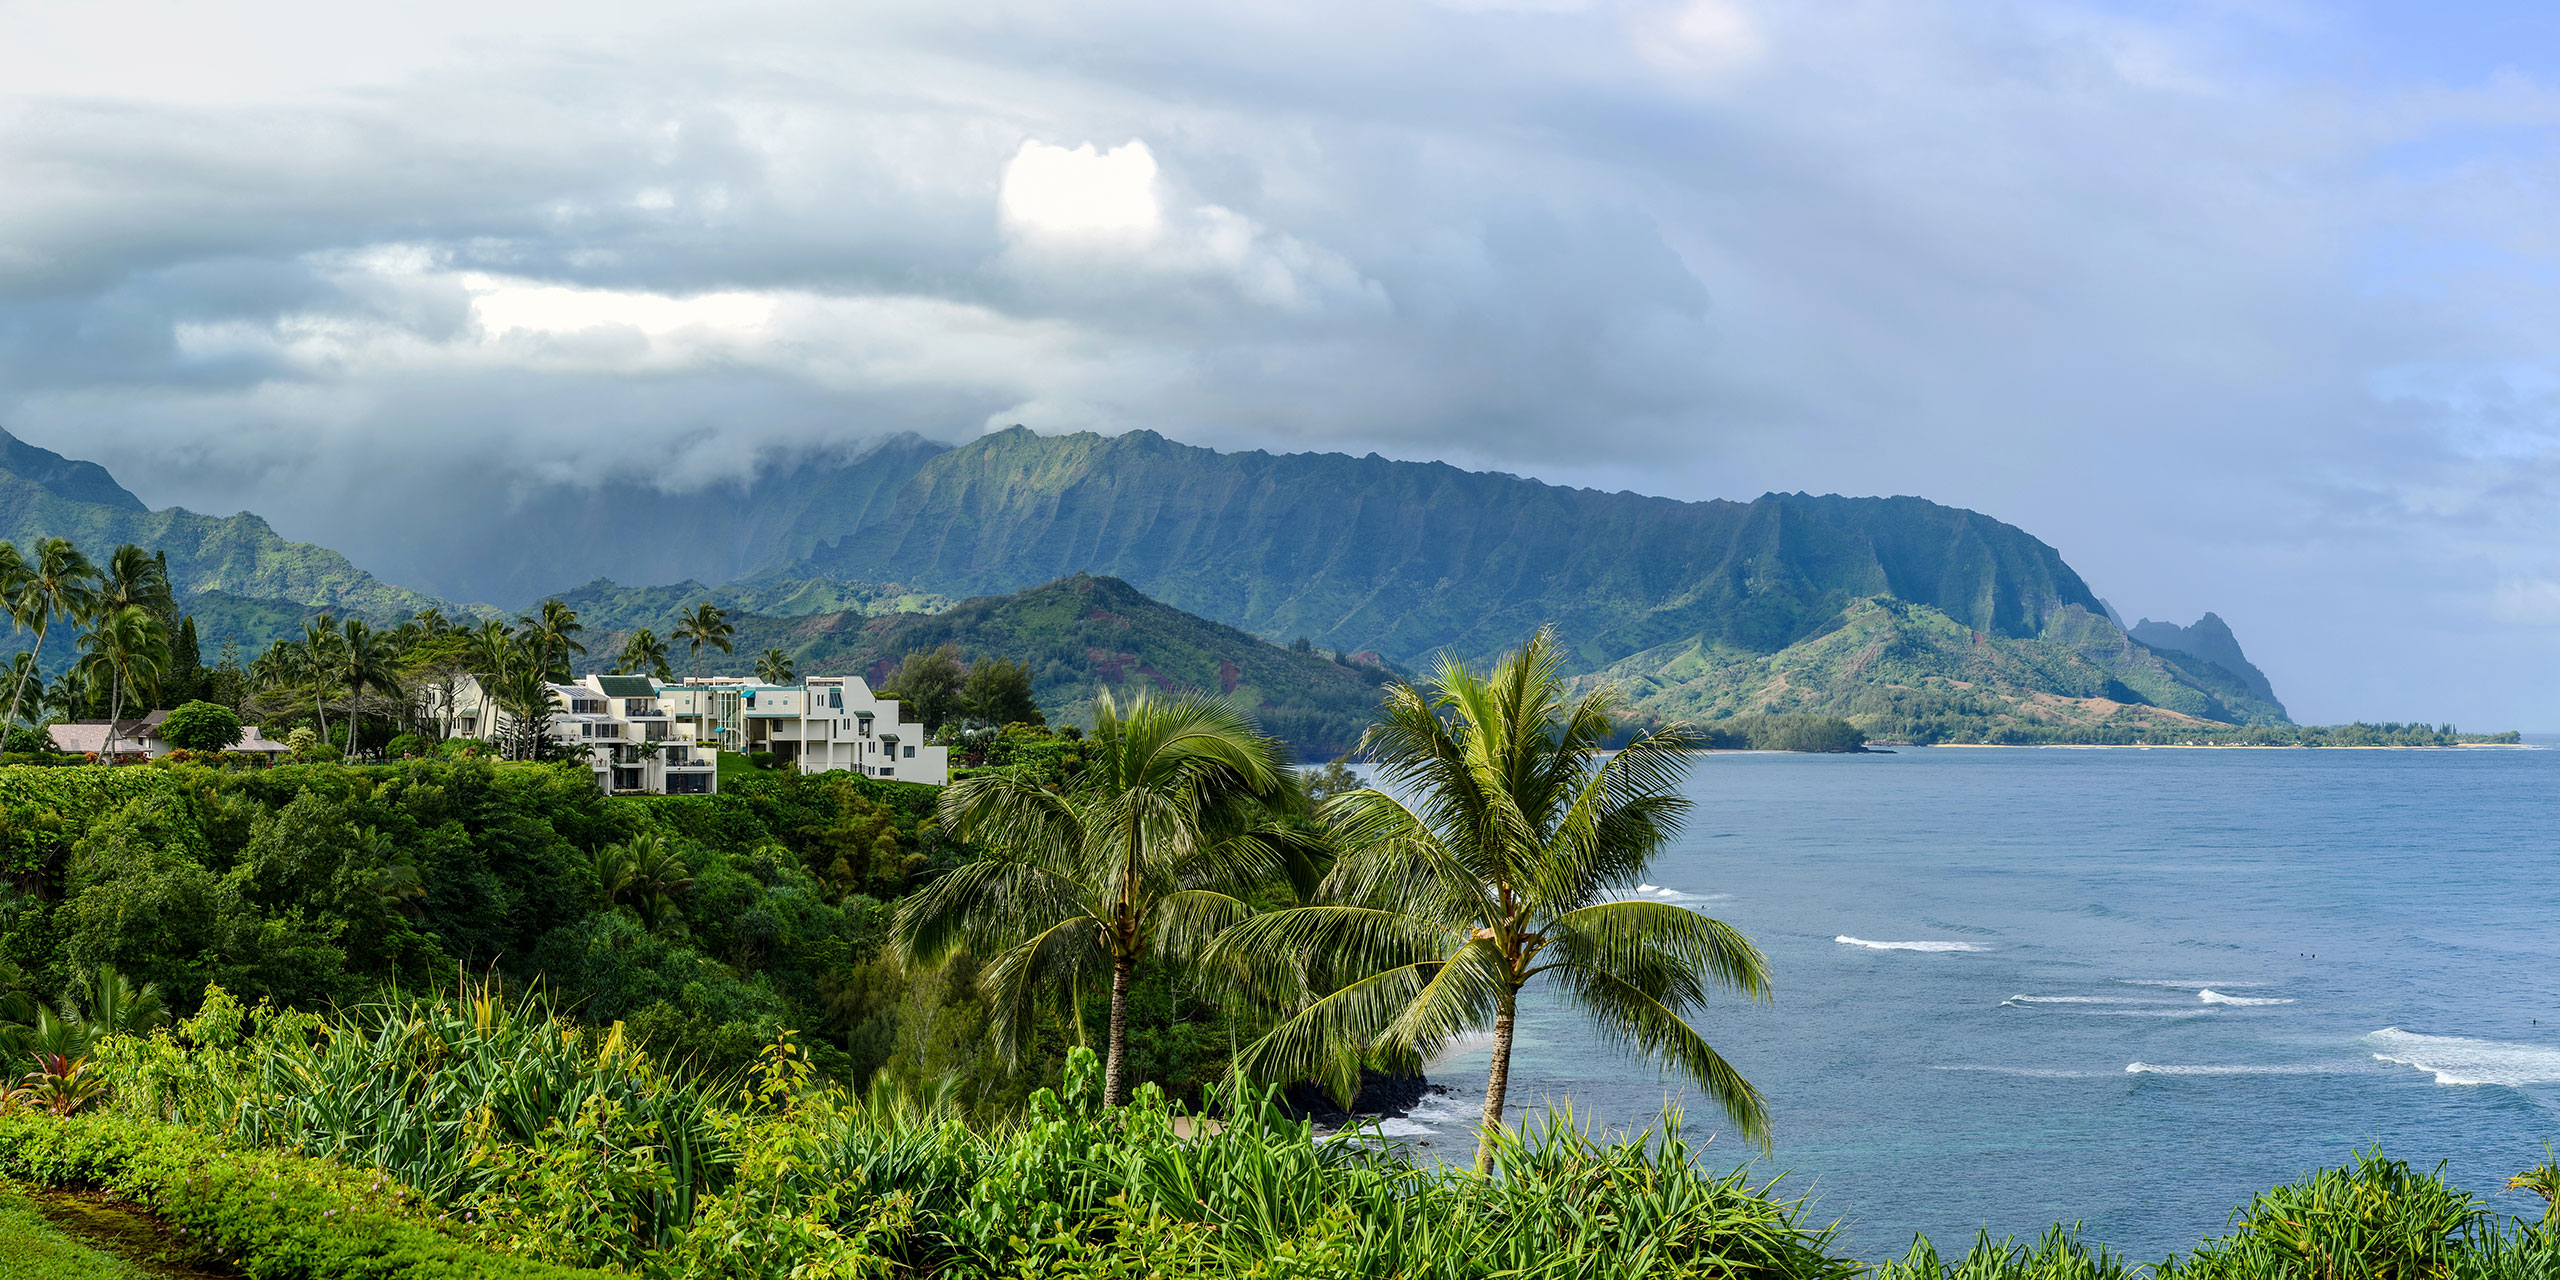 Hawaii; Courtesy of Sean Xu/Shutterstock.com